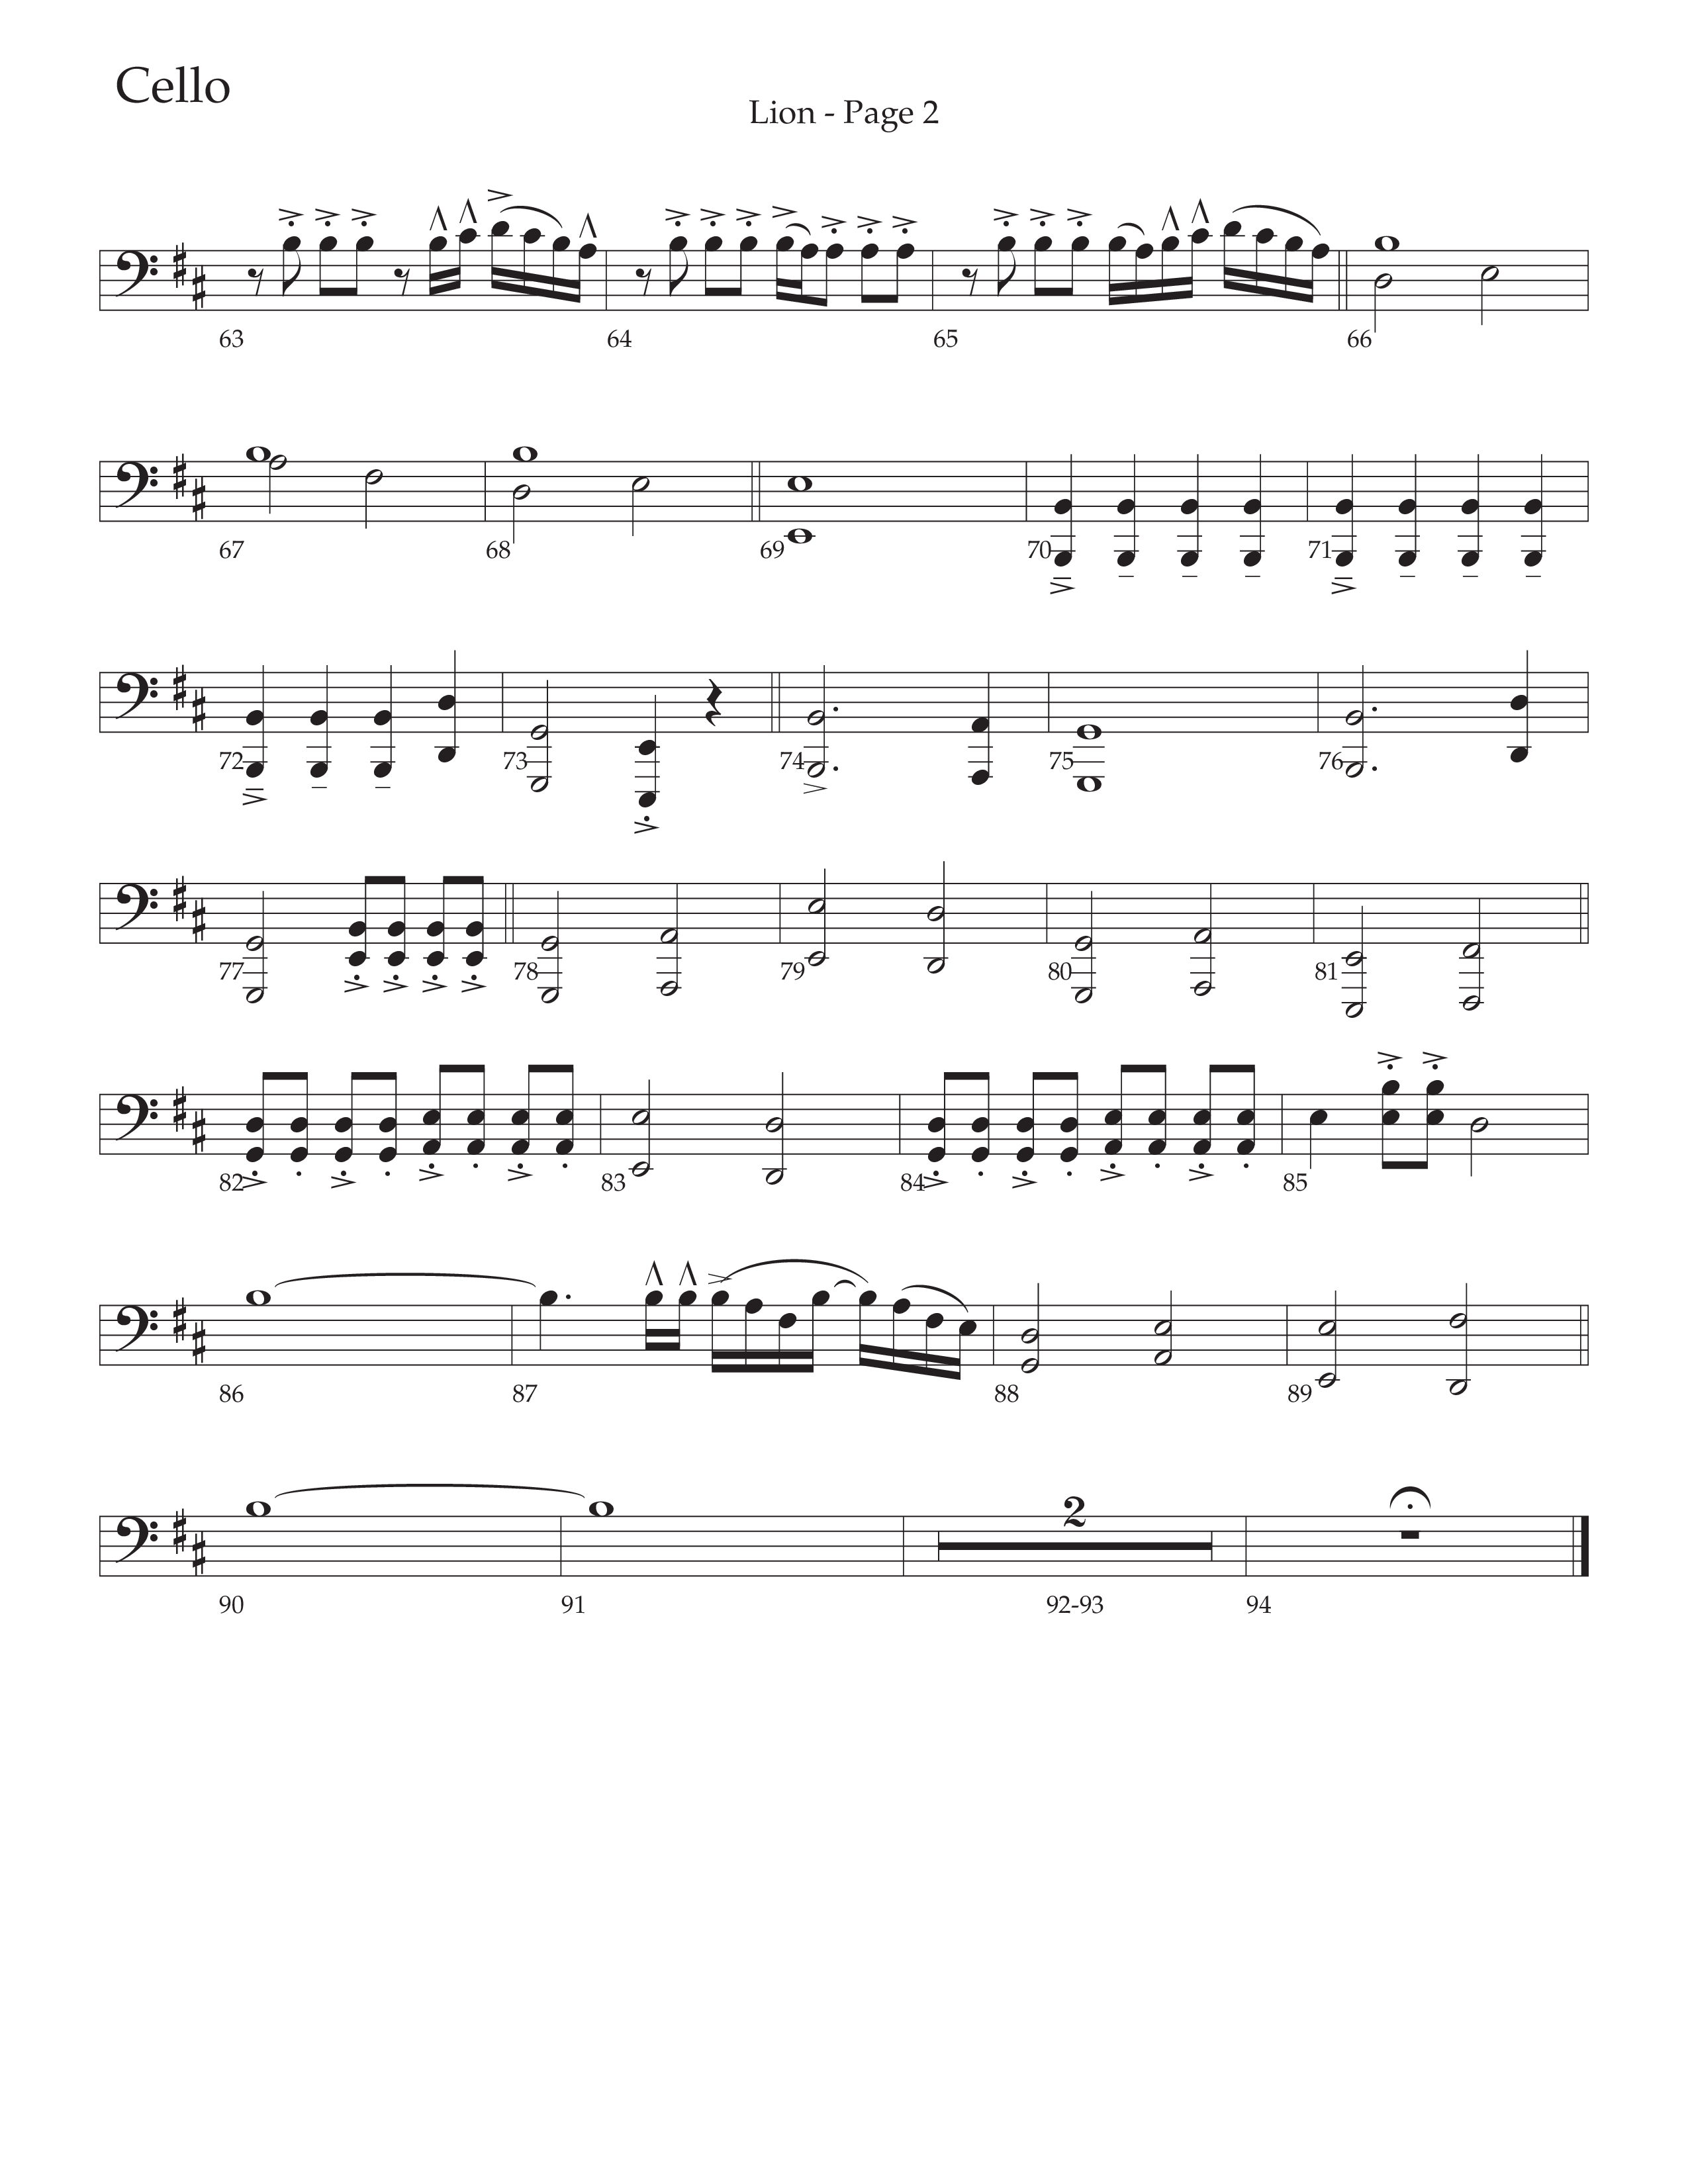 LION (Choral Anthem SATB) Cello (Daywind Worship / Arr. Phil Nitz)